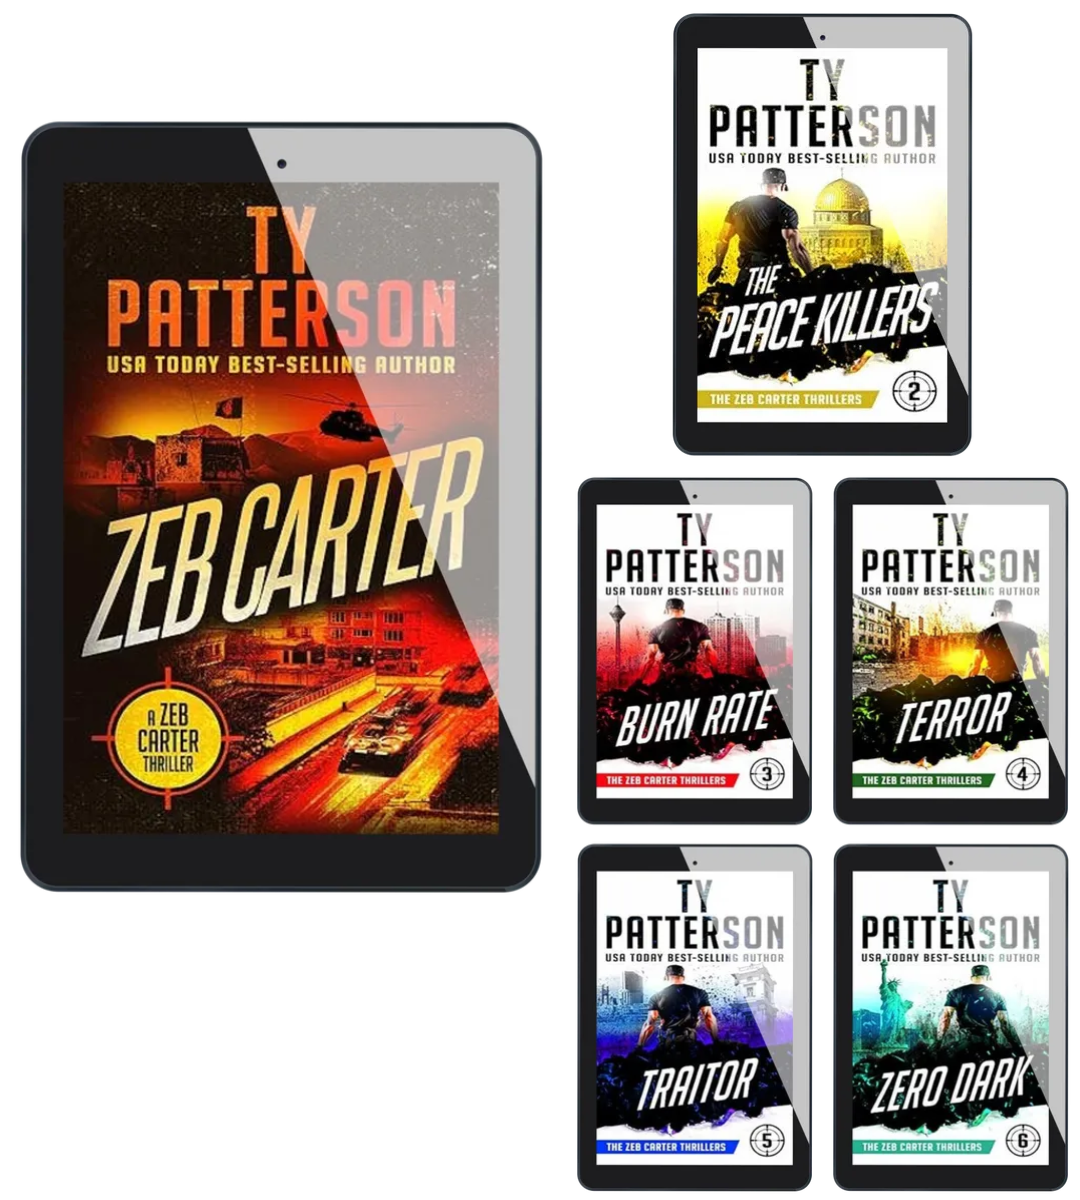 Zeb Carter Series Starter Collection First Six eBooks - Books 1-6